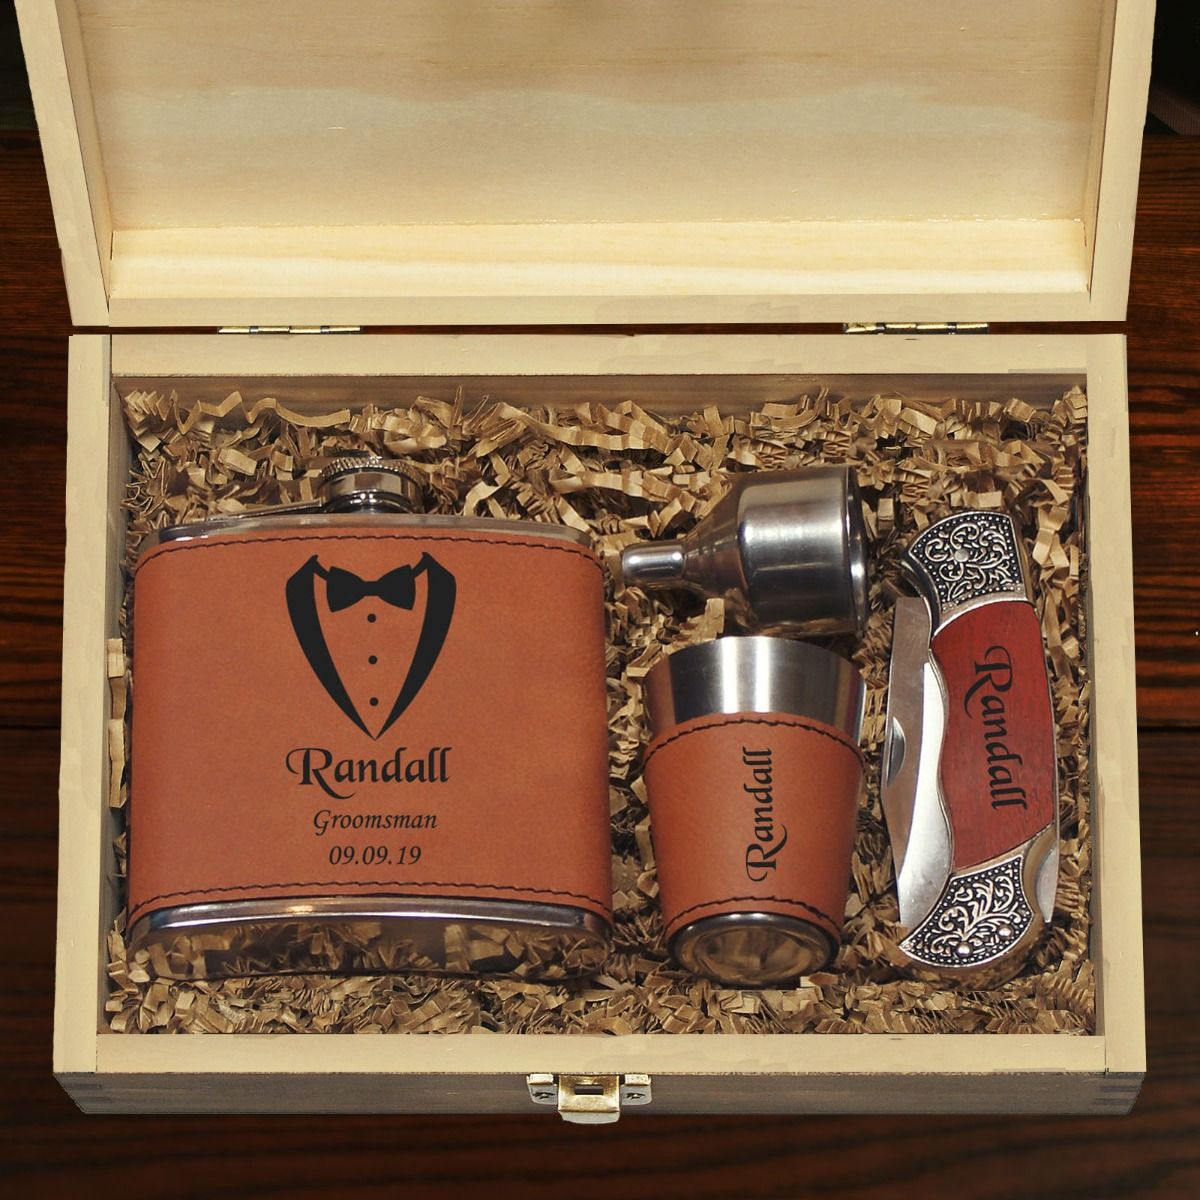 Personalized Flask & Pocket Knife Groomsman Gift Set - The Man Registry